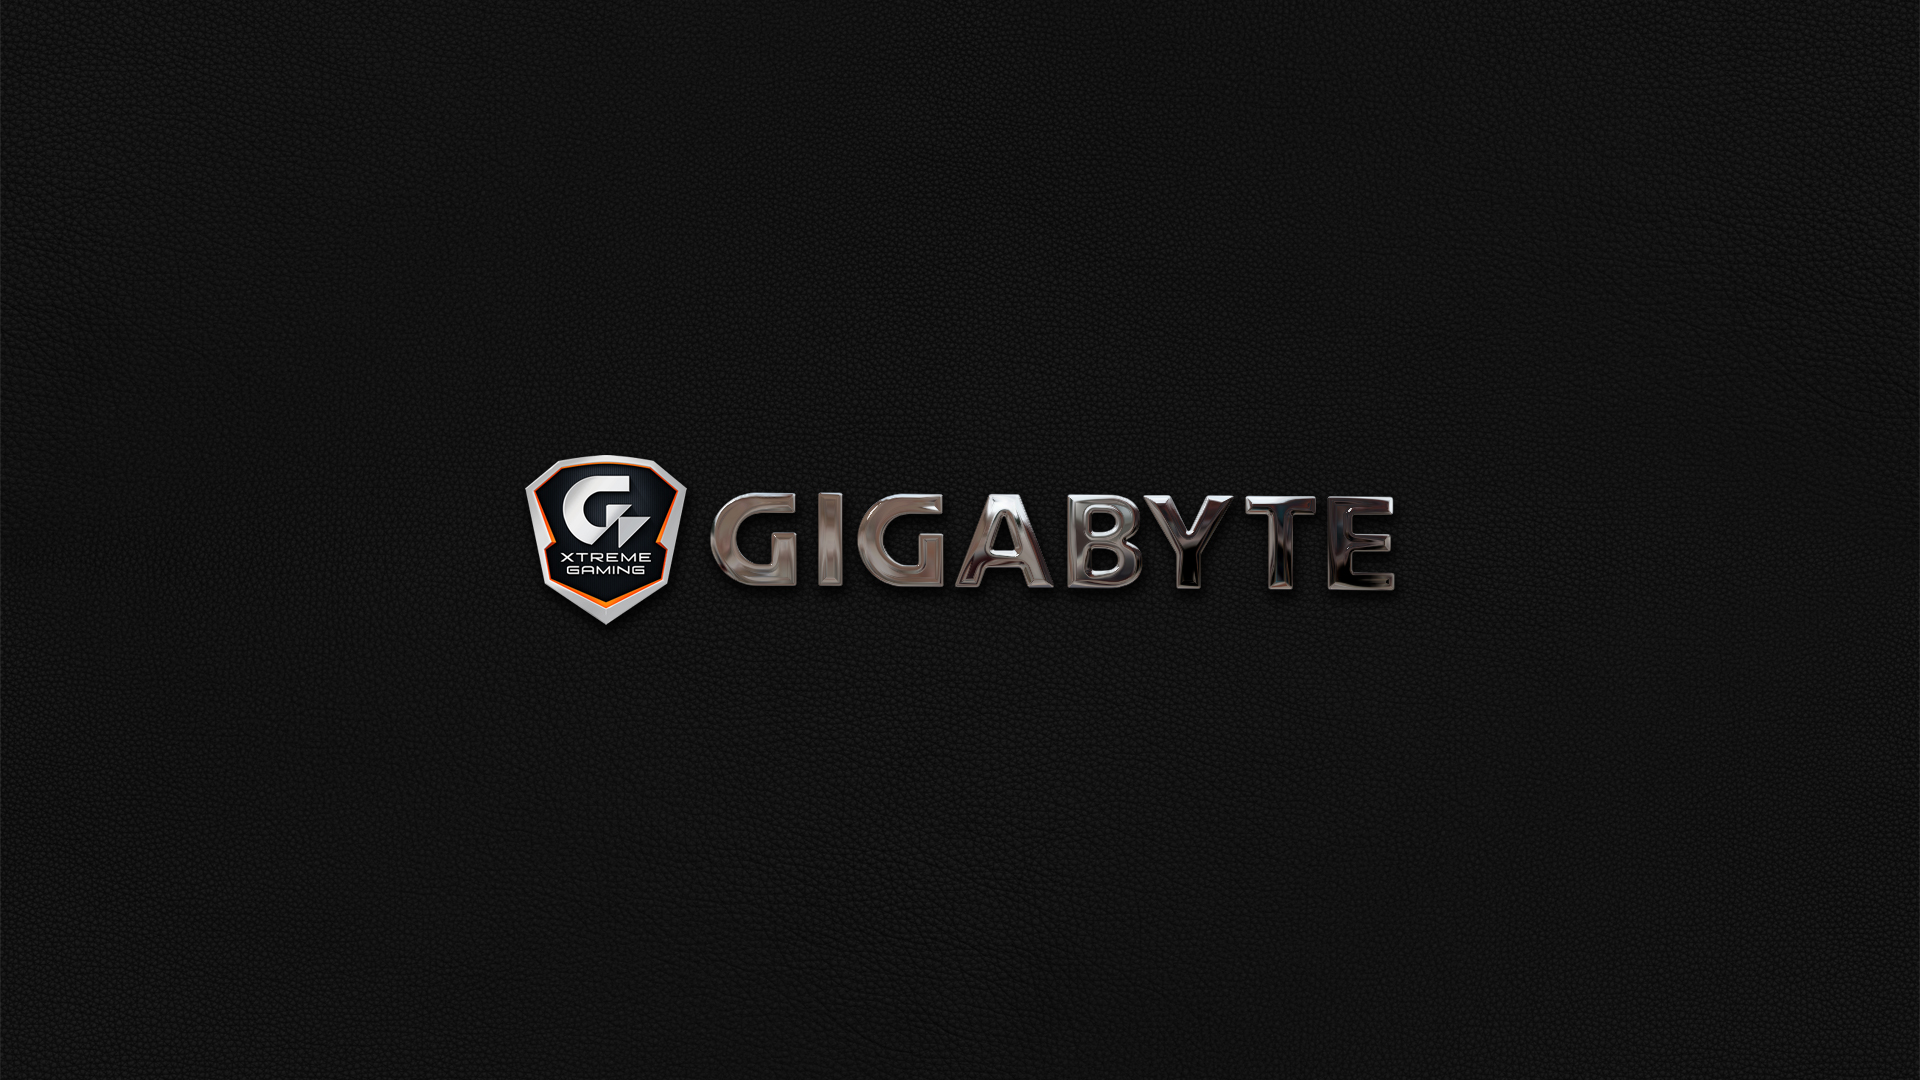 Gigabyte-Wallpaper by Stickcorporation on DeviantArt